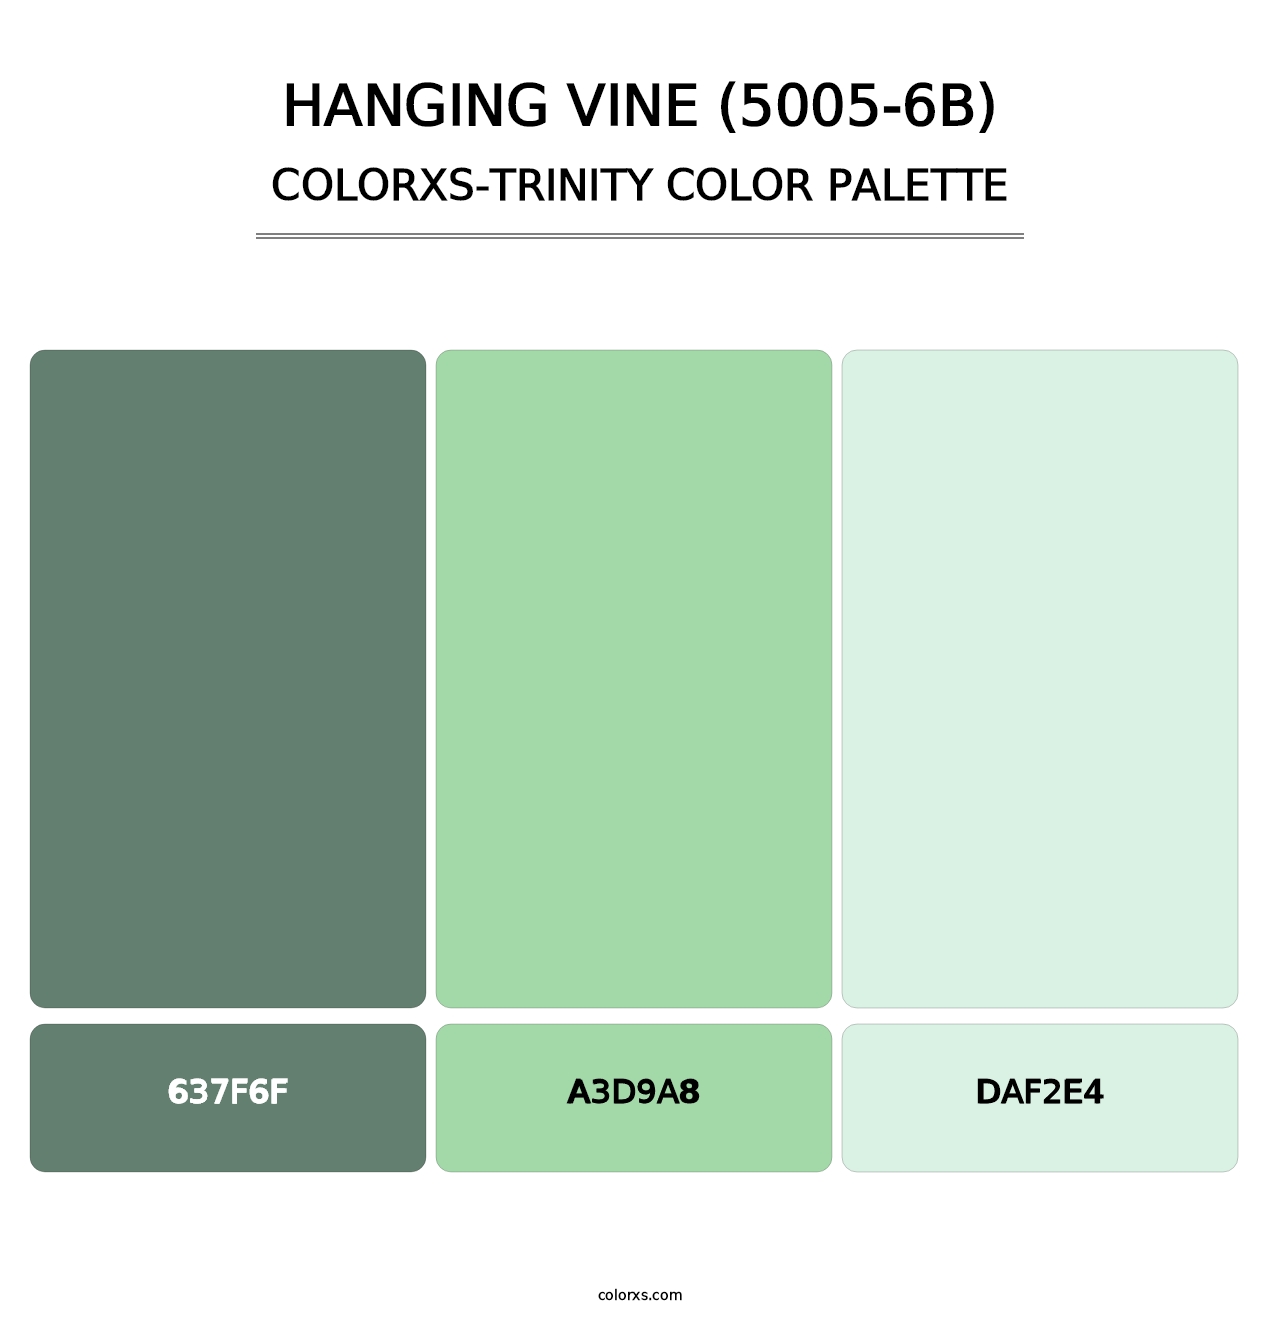 Hanging Vine (5005-6B) - Colorxs Trinity Palette